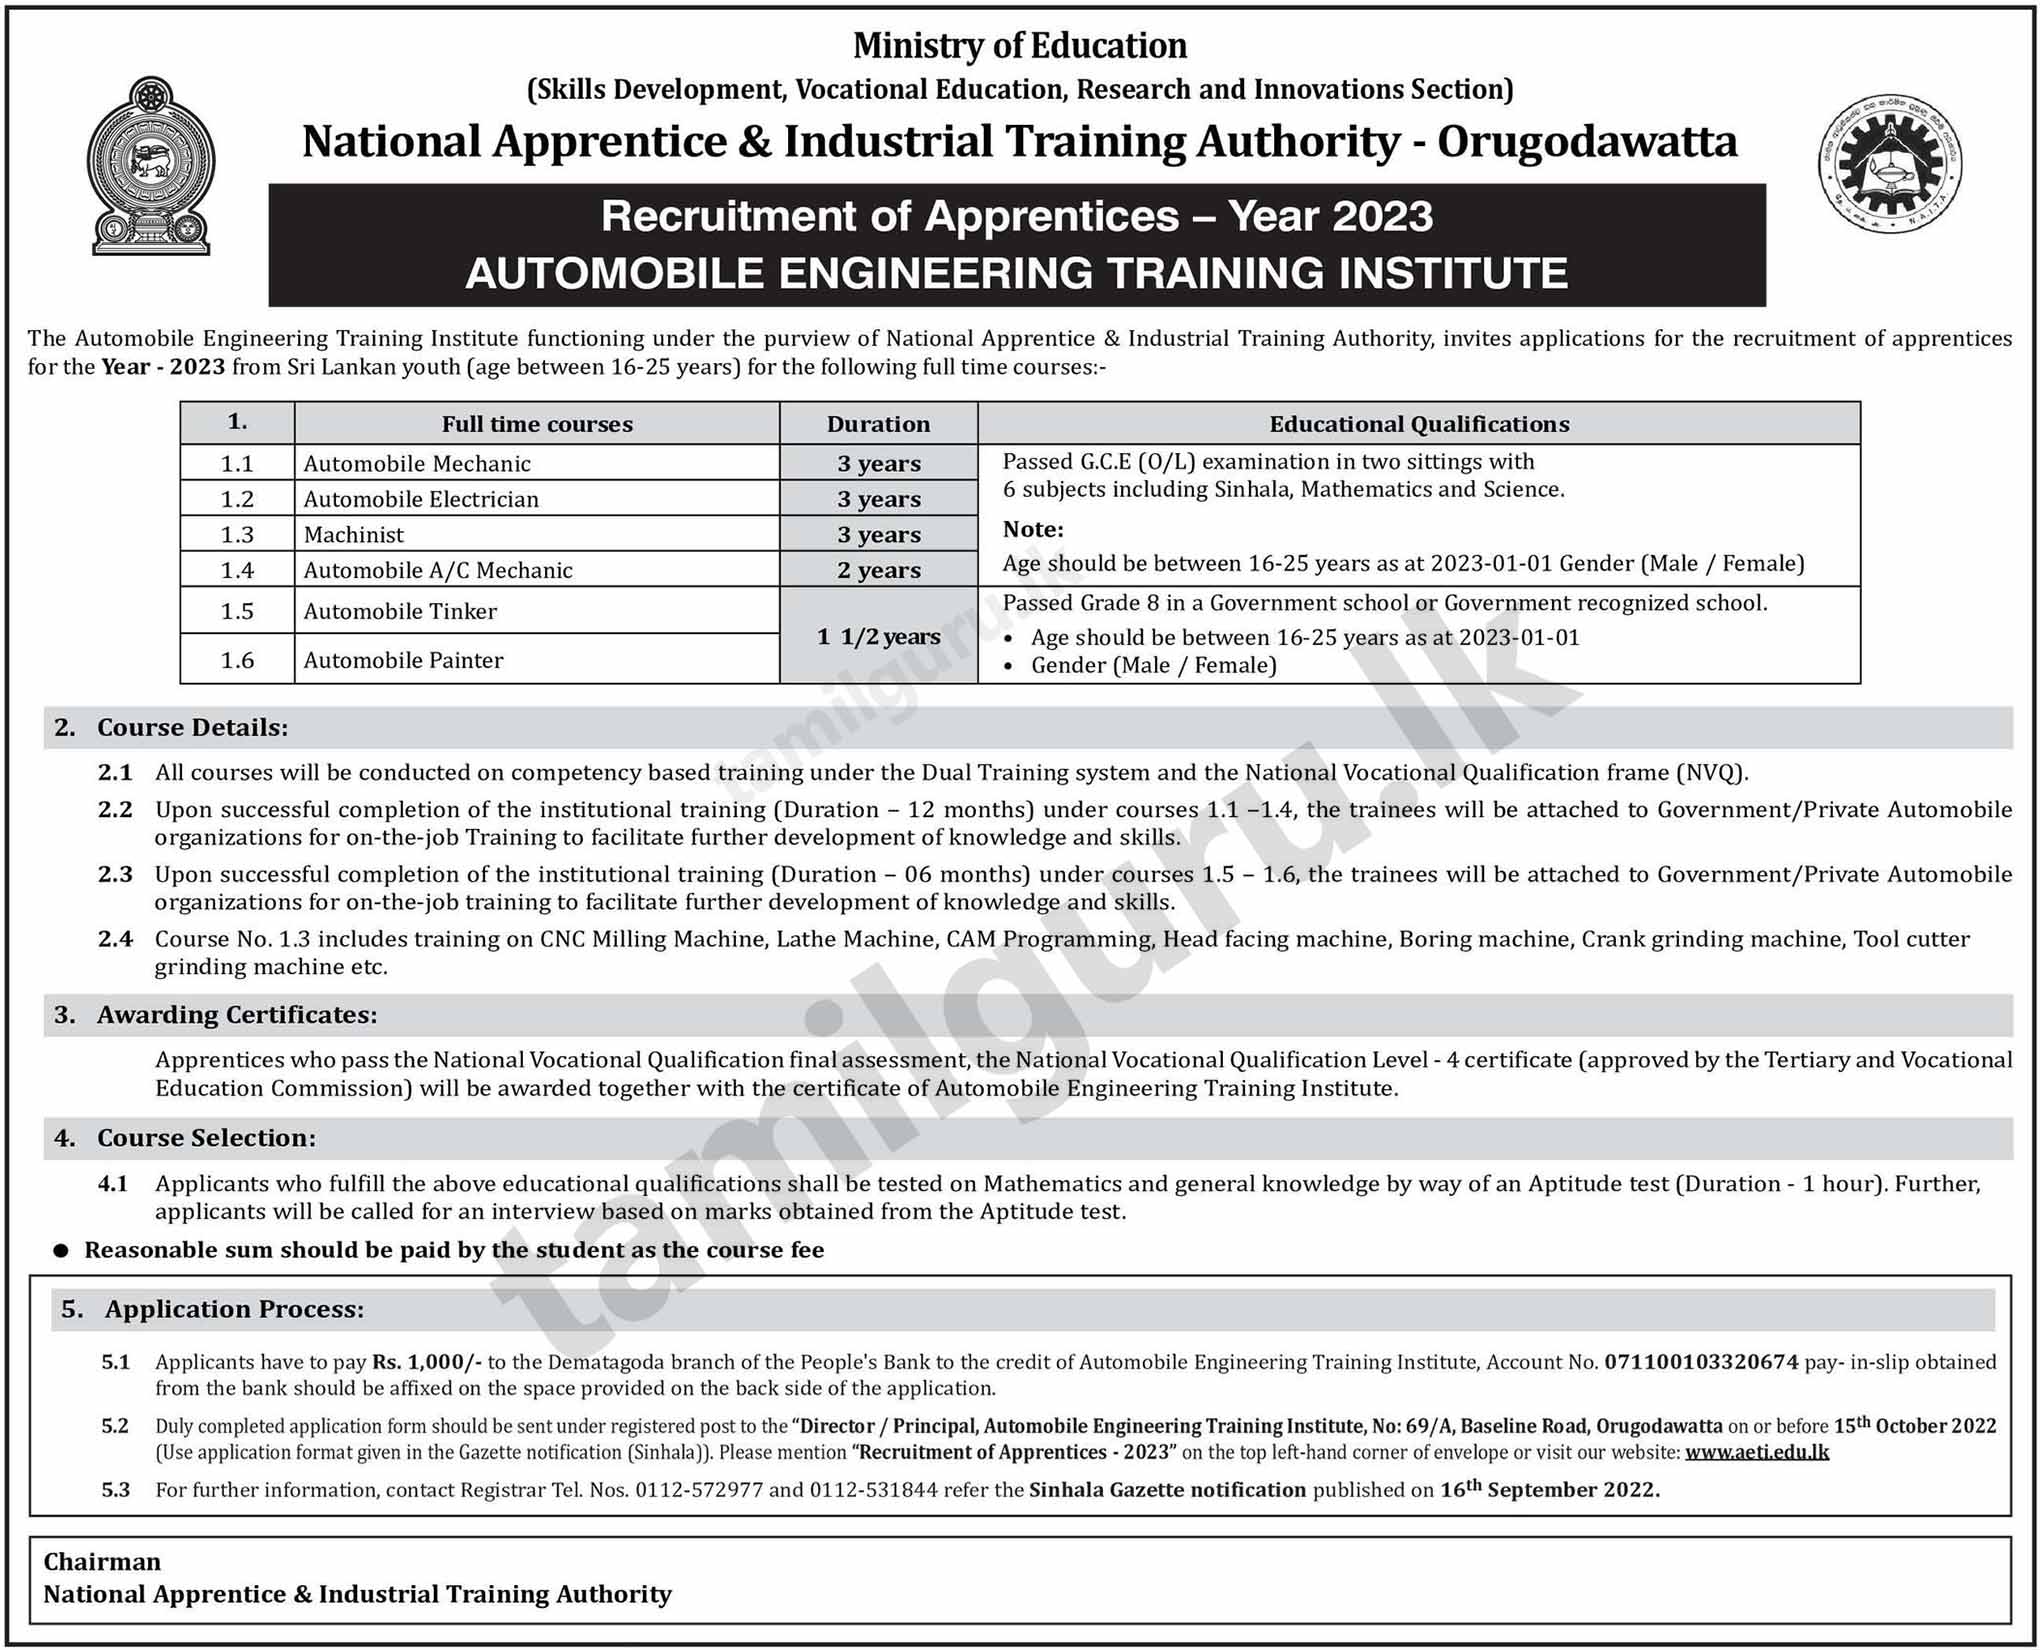 AETI (Japan Tech) Application 2022 - Automobile Engineering Training Institute